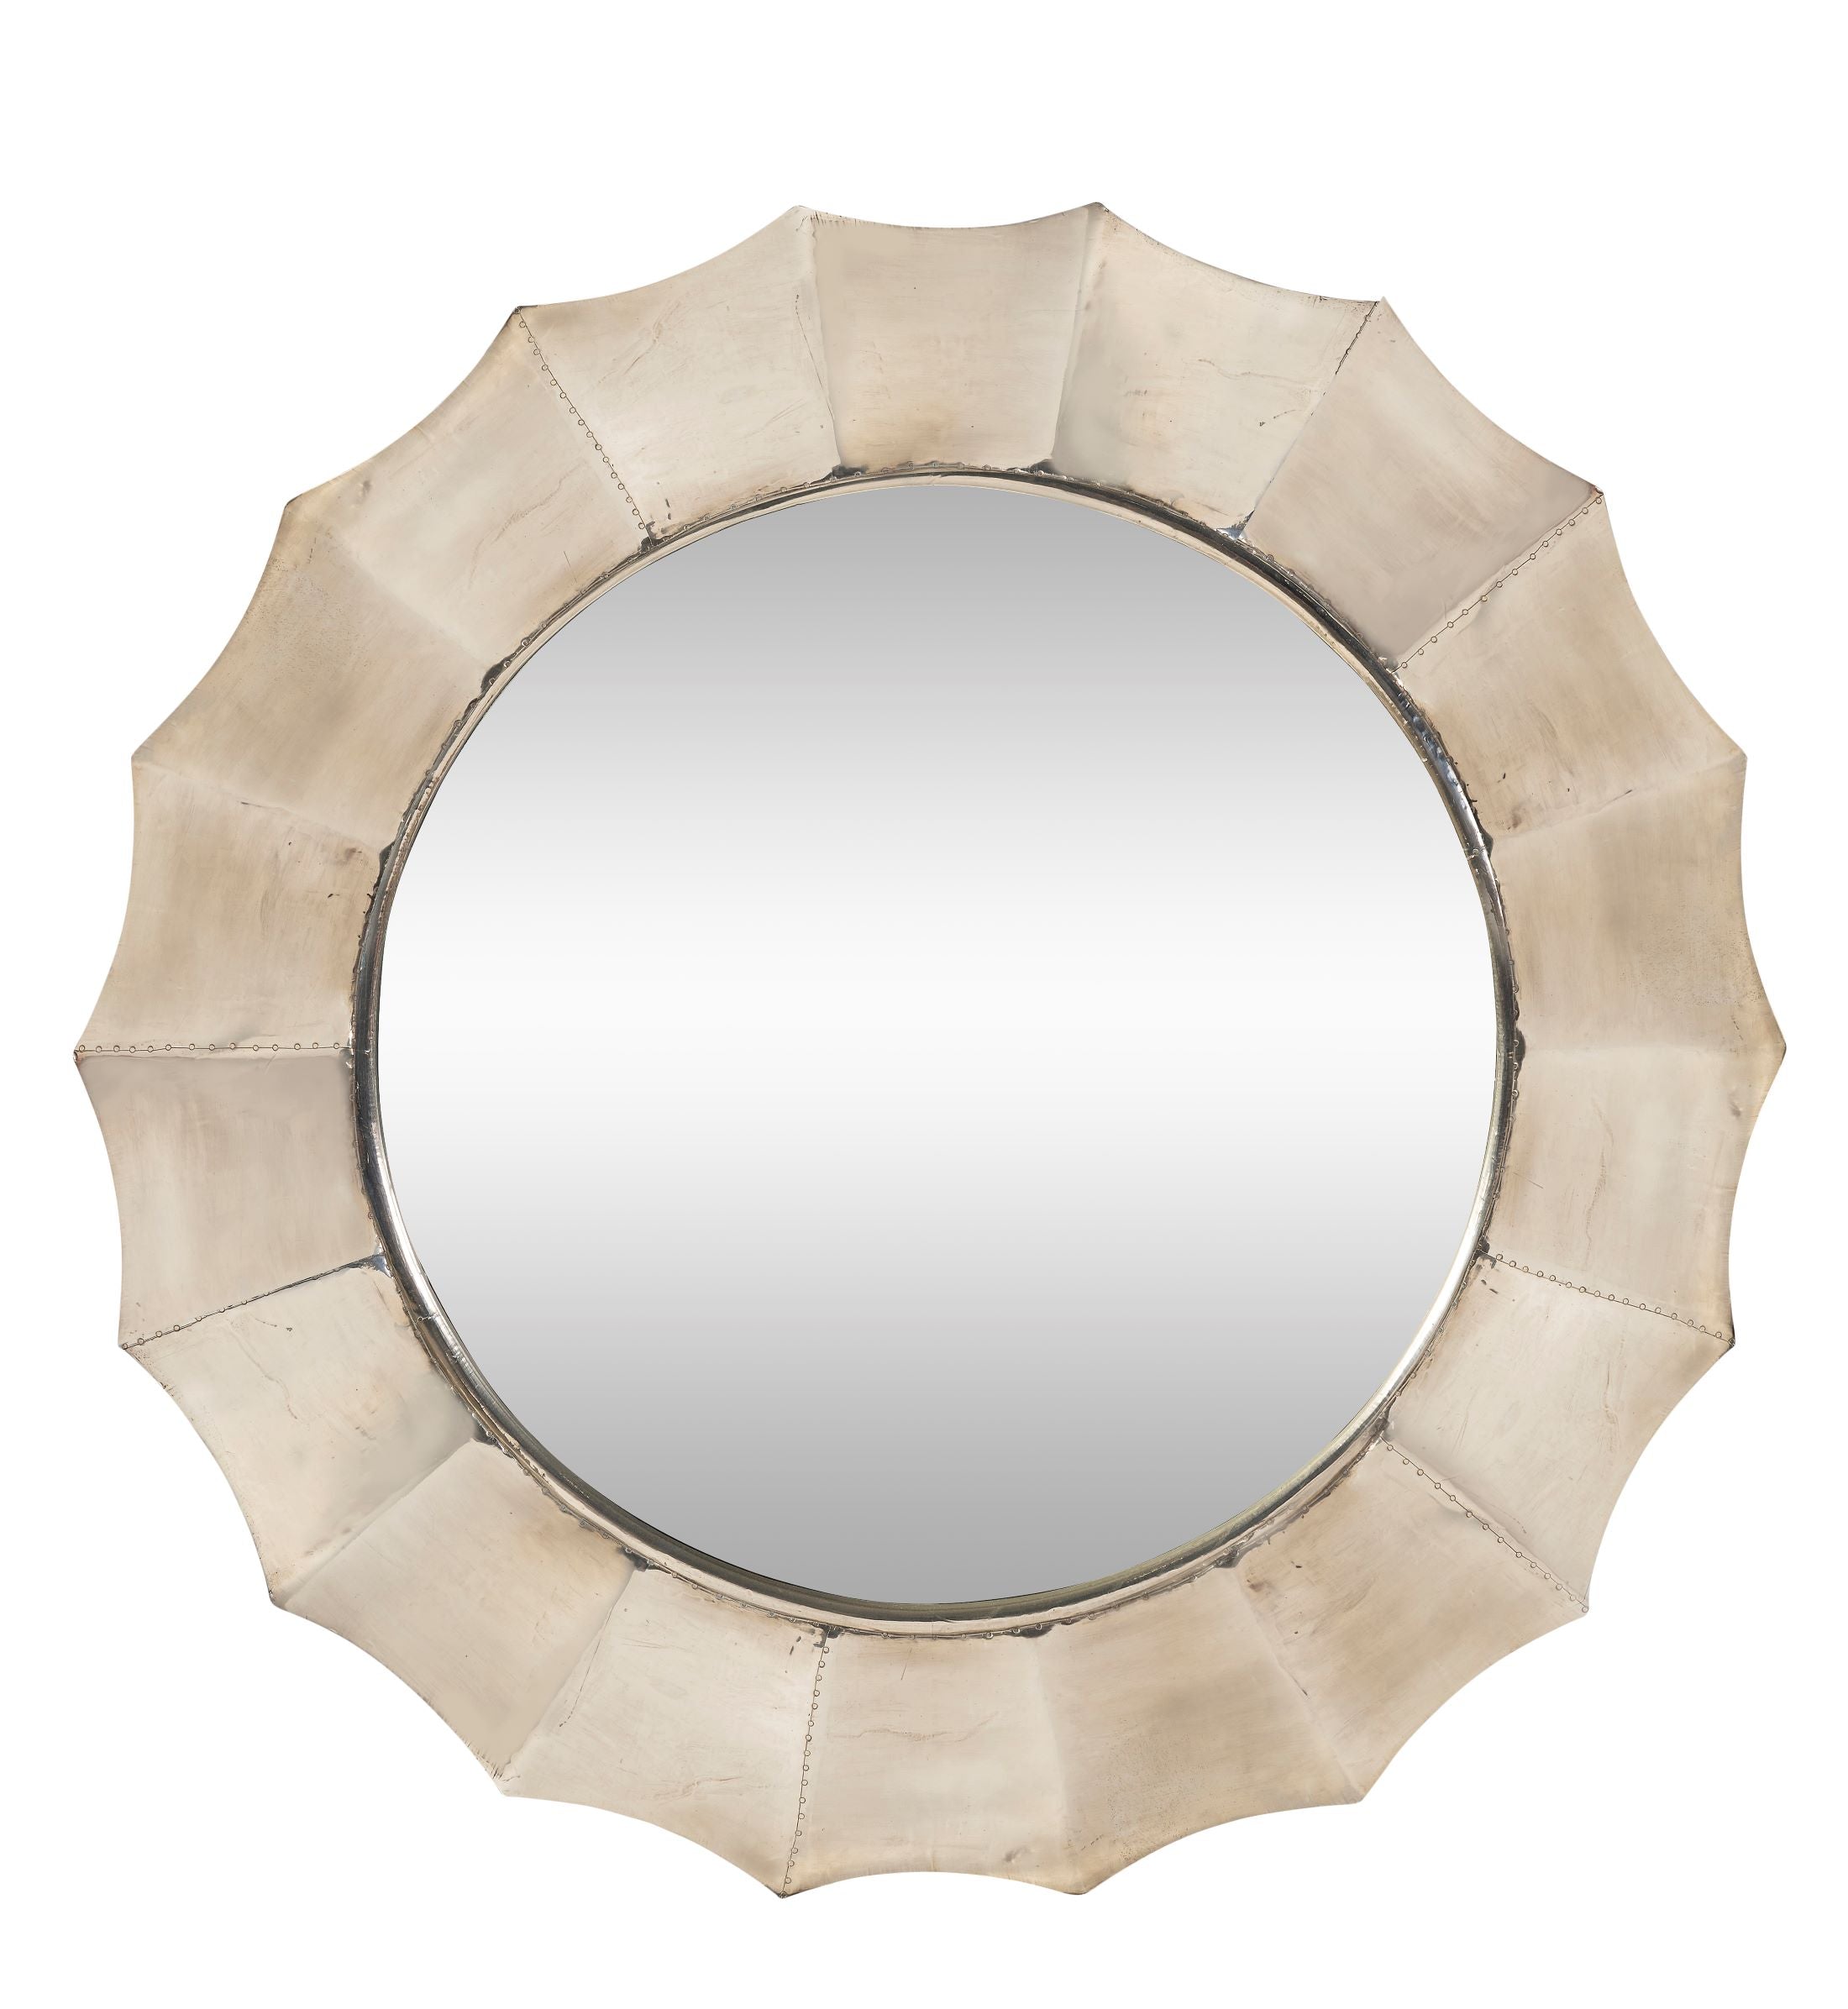 A Sunburst Mirror with Pressed Metal Overlay